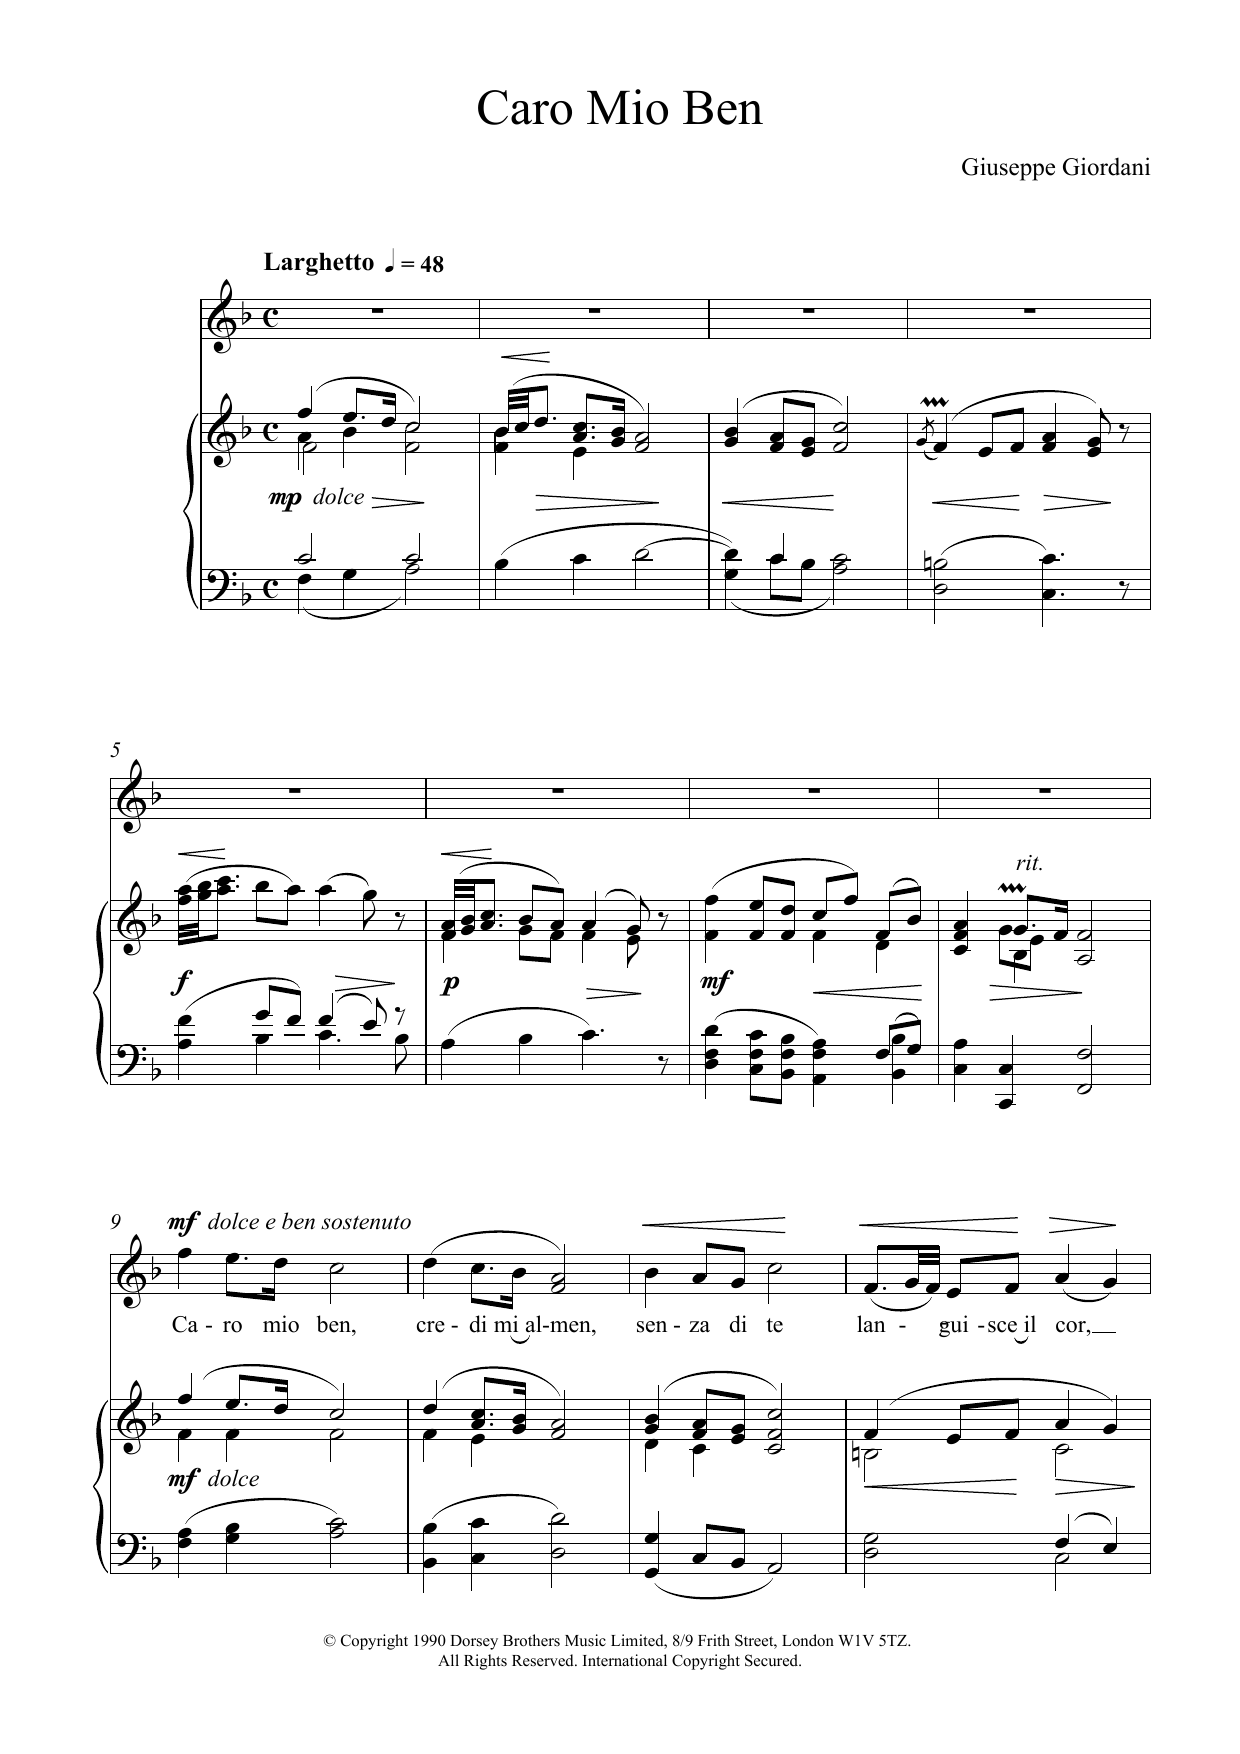 Giuseppe Giordani Caro Mio Ben Sheet Music Notes & Chords for Piano & Vocal - Download or Print PDF